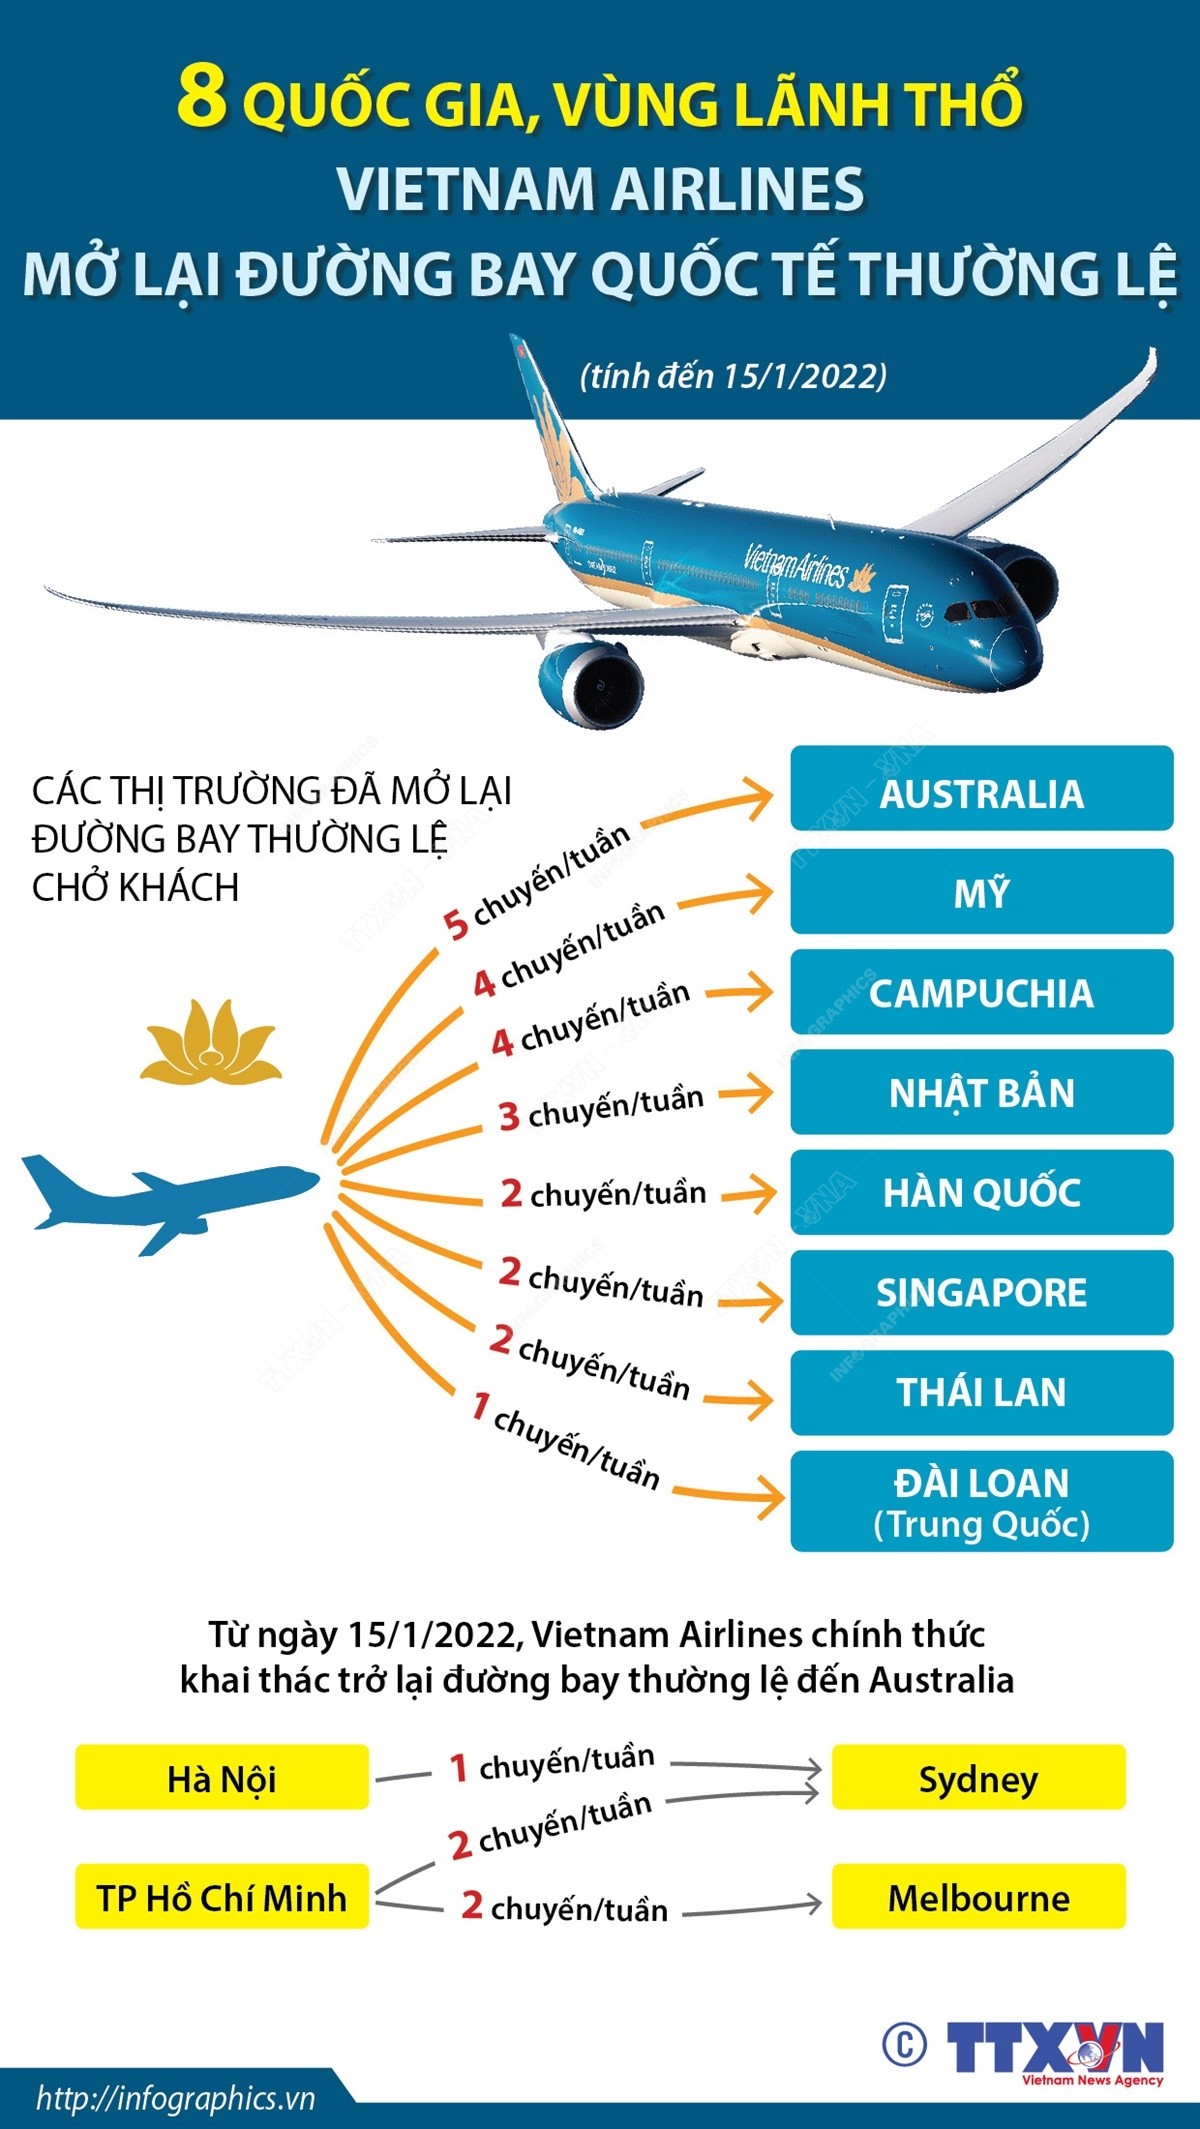 hom-nay-vietnam-airlines-khai-thac-tro-lai-duong-bay-thuong-le-den-australia-1642217750.jpeg